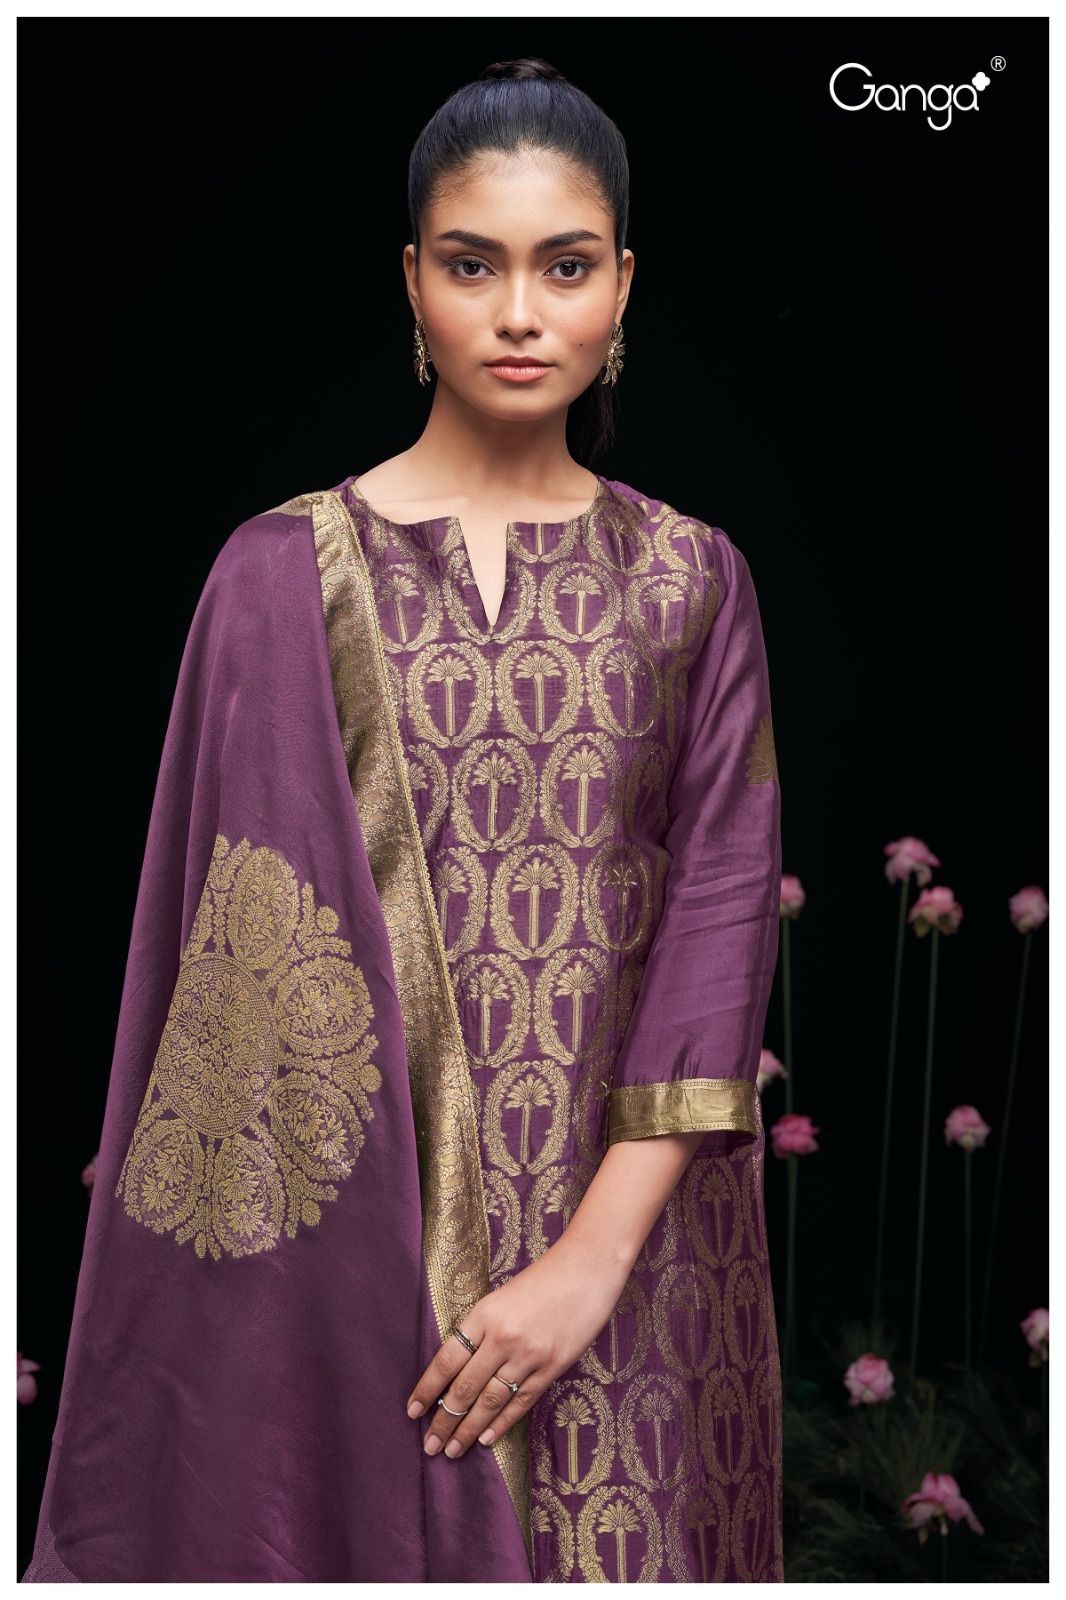 Ayaka 2292 Ganga Woven Silk Plazzo Style Suits